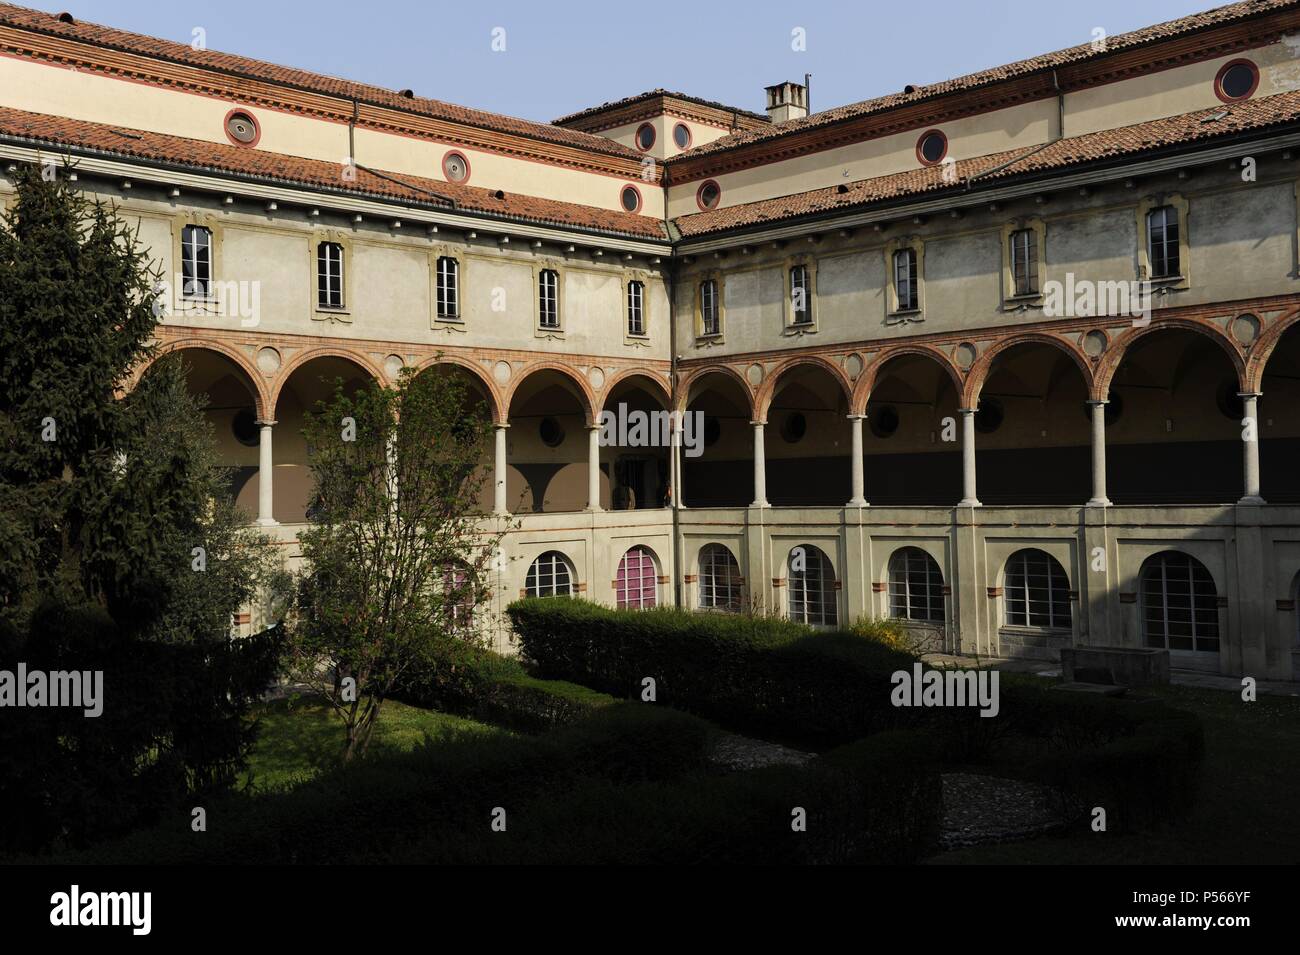 The Science and Technology Museum Leonardo da Vinci. Ancient monastery of San Vittore al Corpo. Cloister. Milan. Italy. Stock Photo